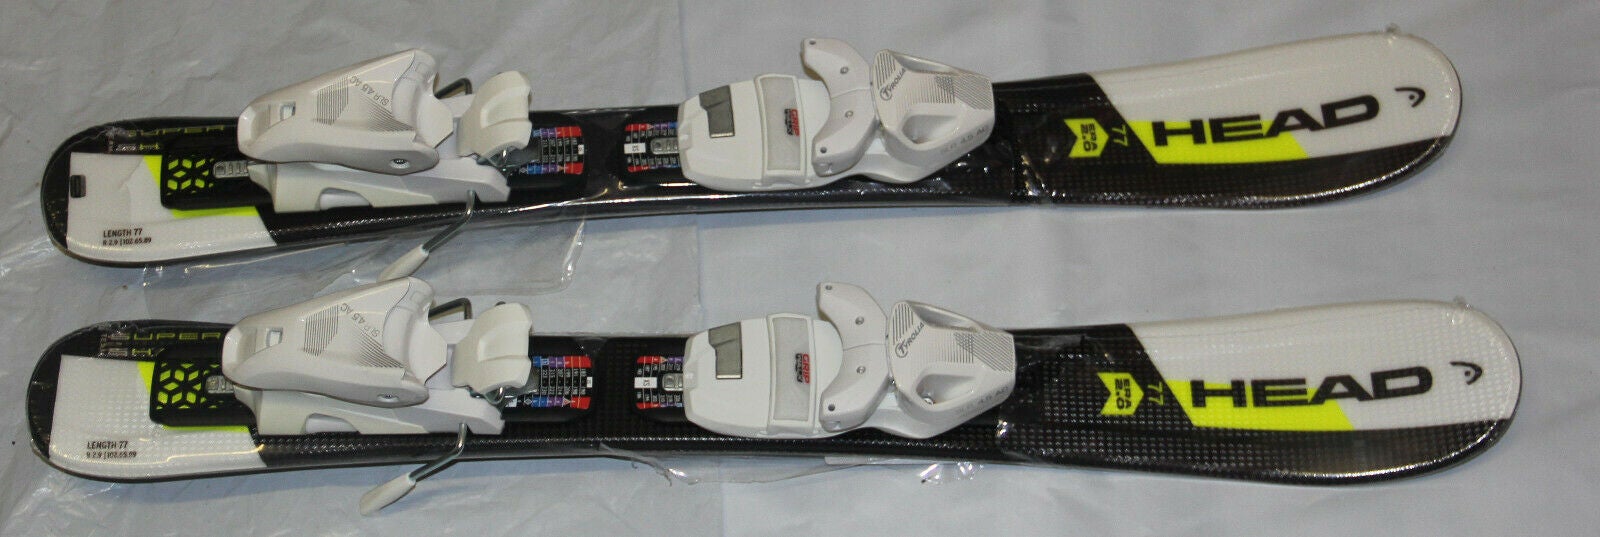 NEW NEW HEAD Supershape kids Skis 77cm + size adjustable bindings SLR4.5 GW white R